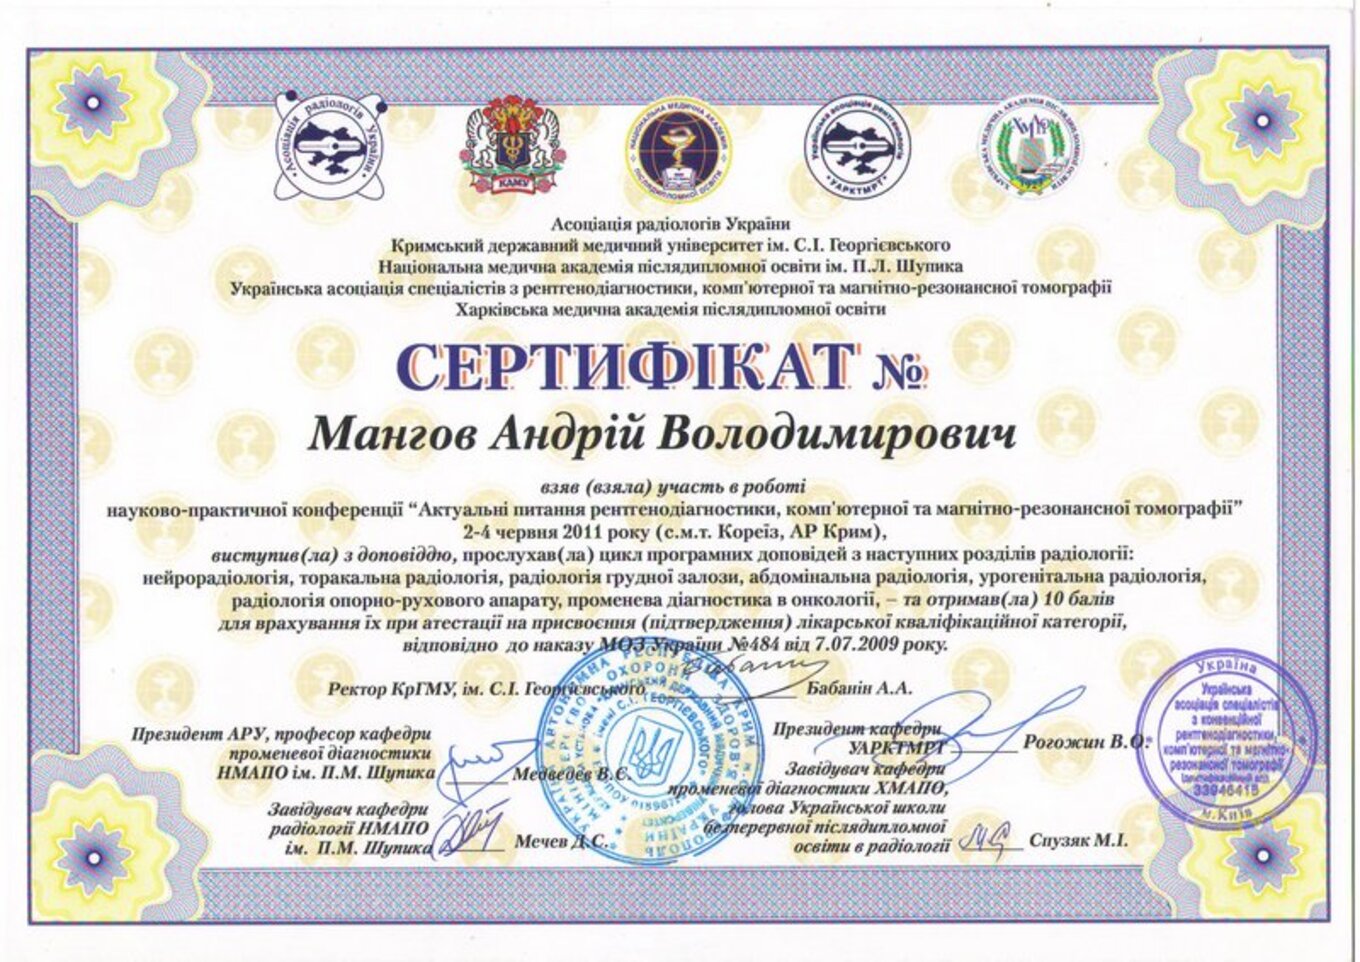 certificates/mangov-andrij-volodimirovich/mangov-certificates-14.jpg